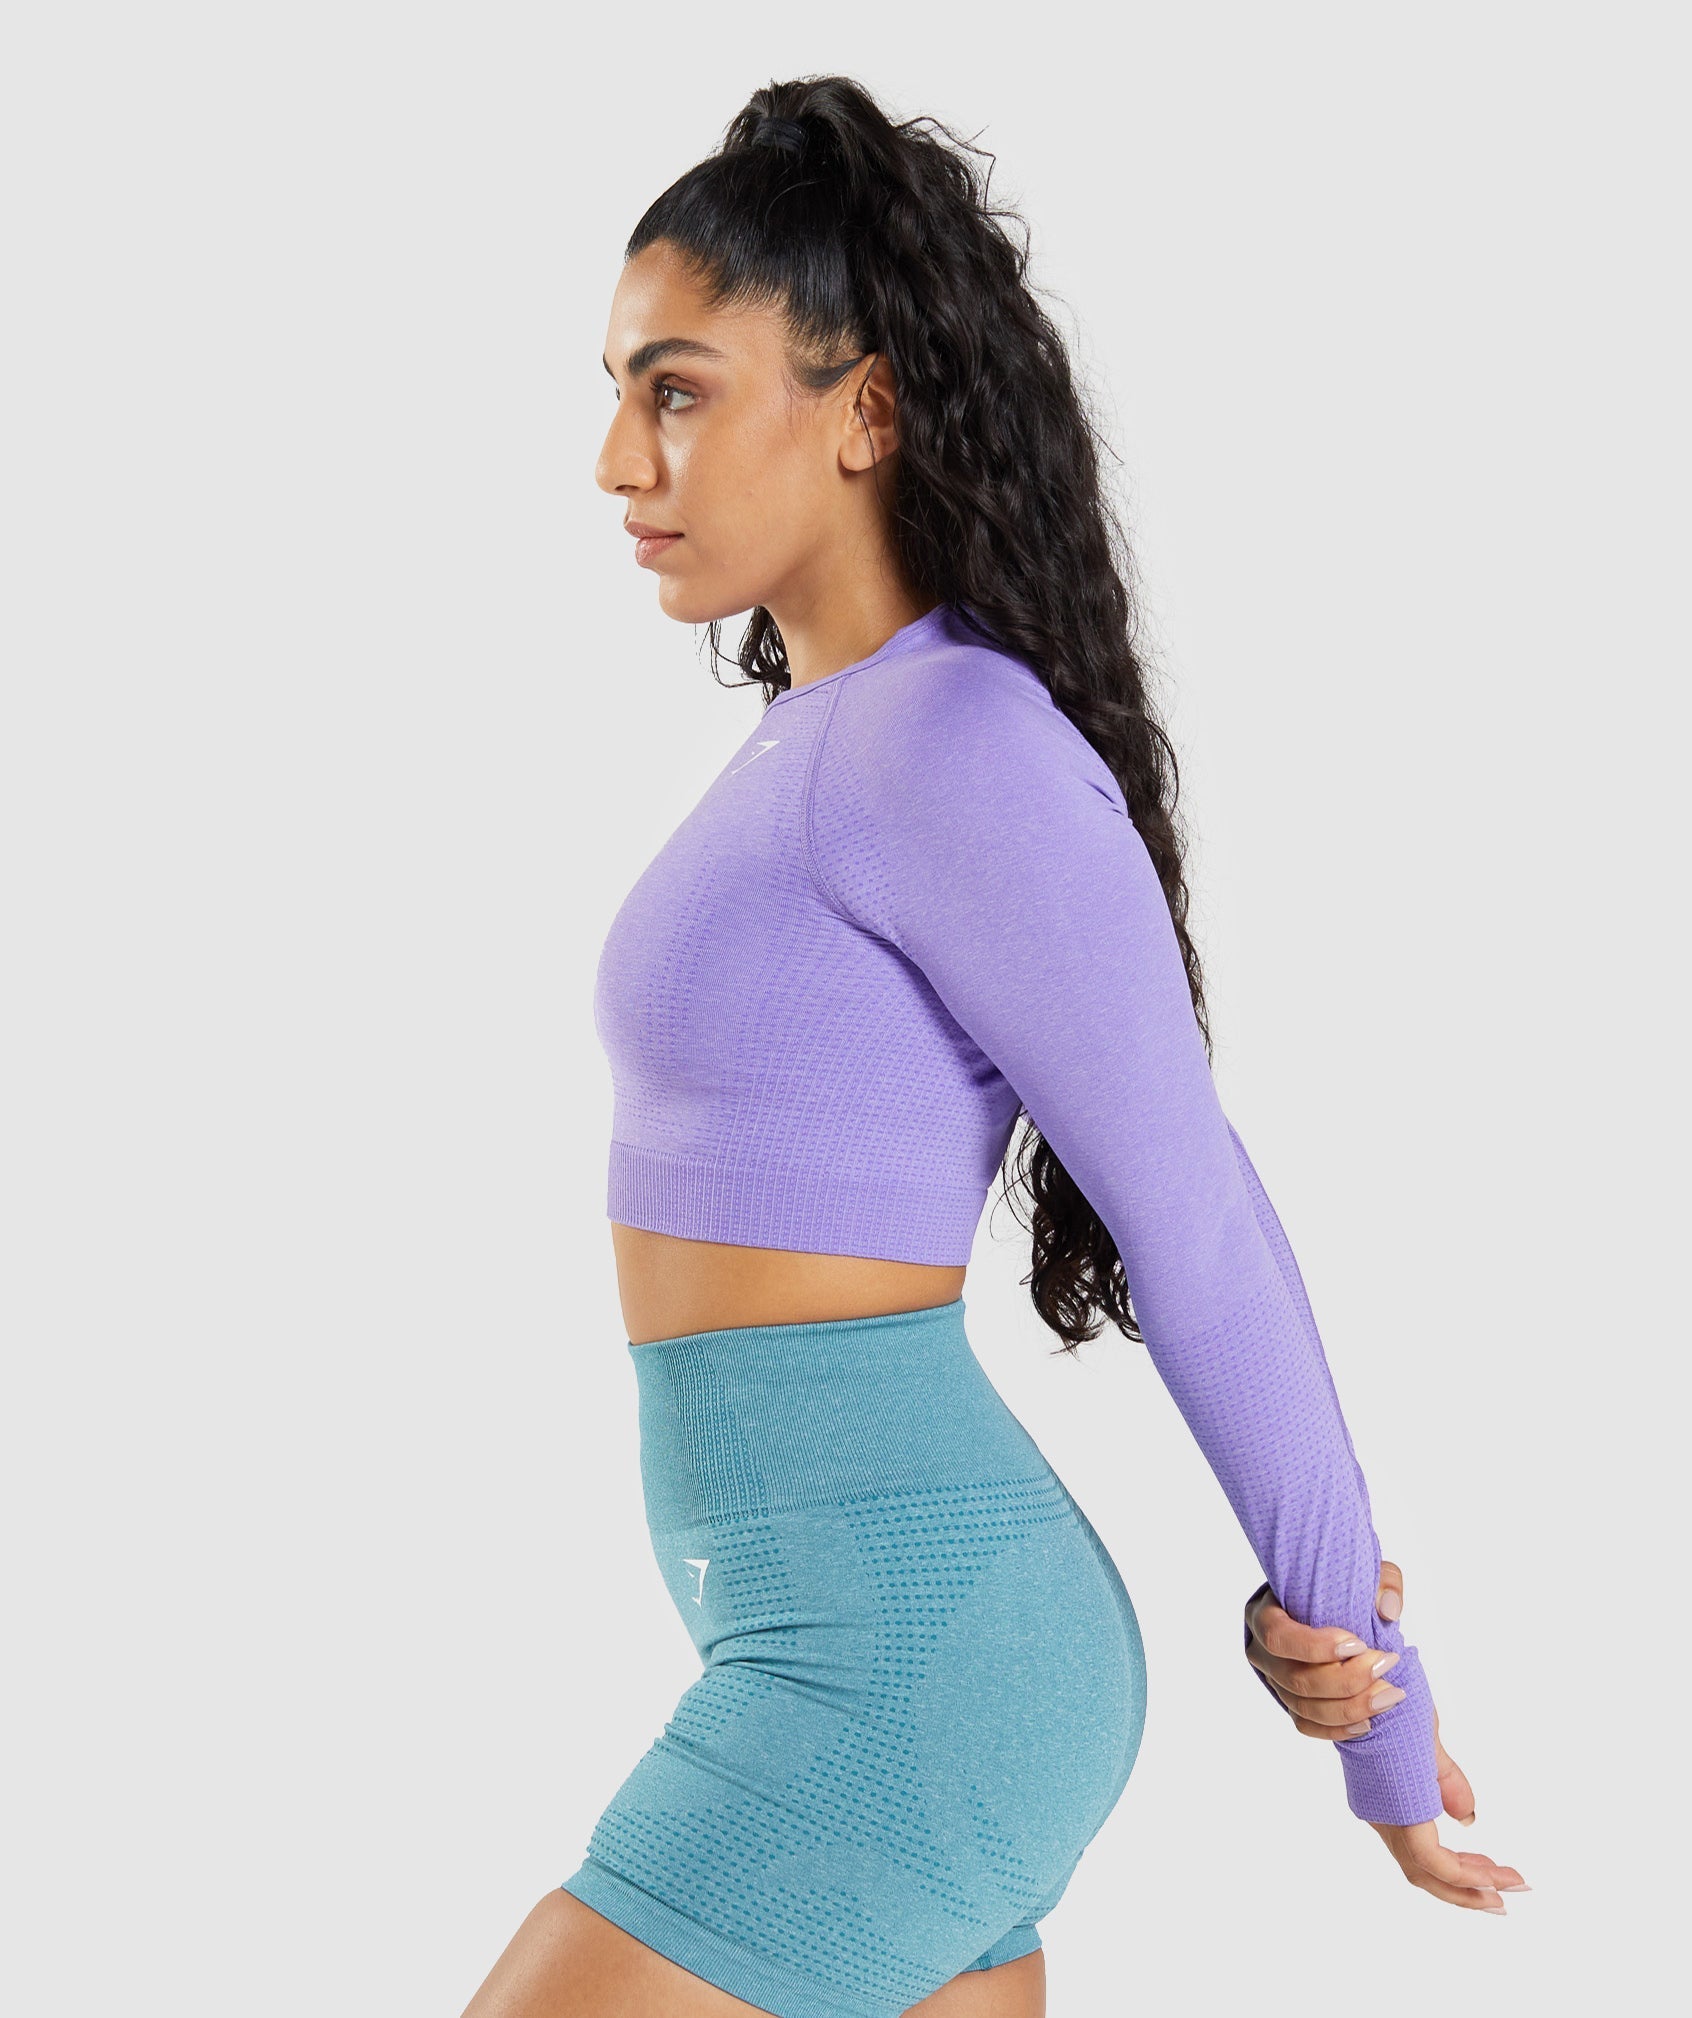 Gymshark Womens Adapt Camo Seamless Long Sleeve Crop Top Purple Small - $30  - From Savannah